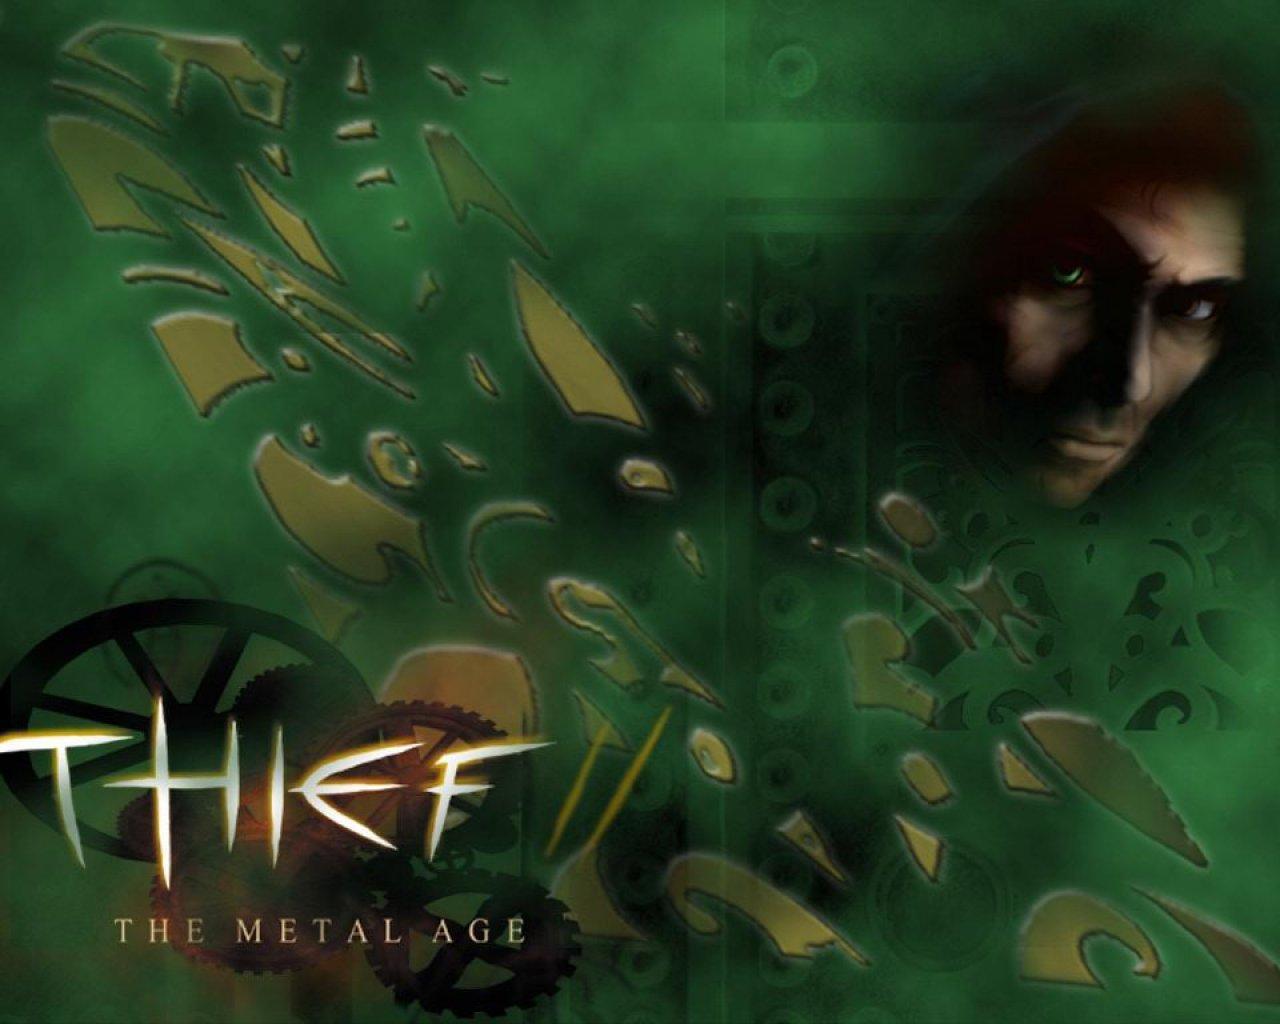 Thief II The Metal Age Desktop Wallpapers, Thief II The Metal Age, Game